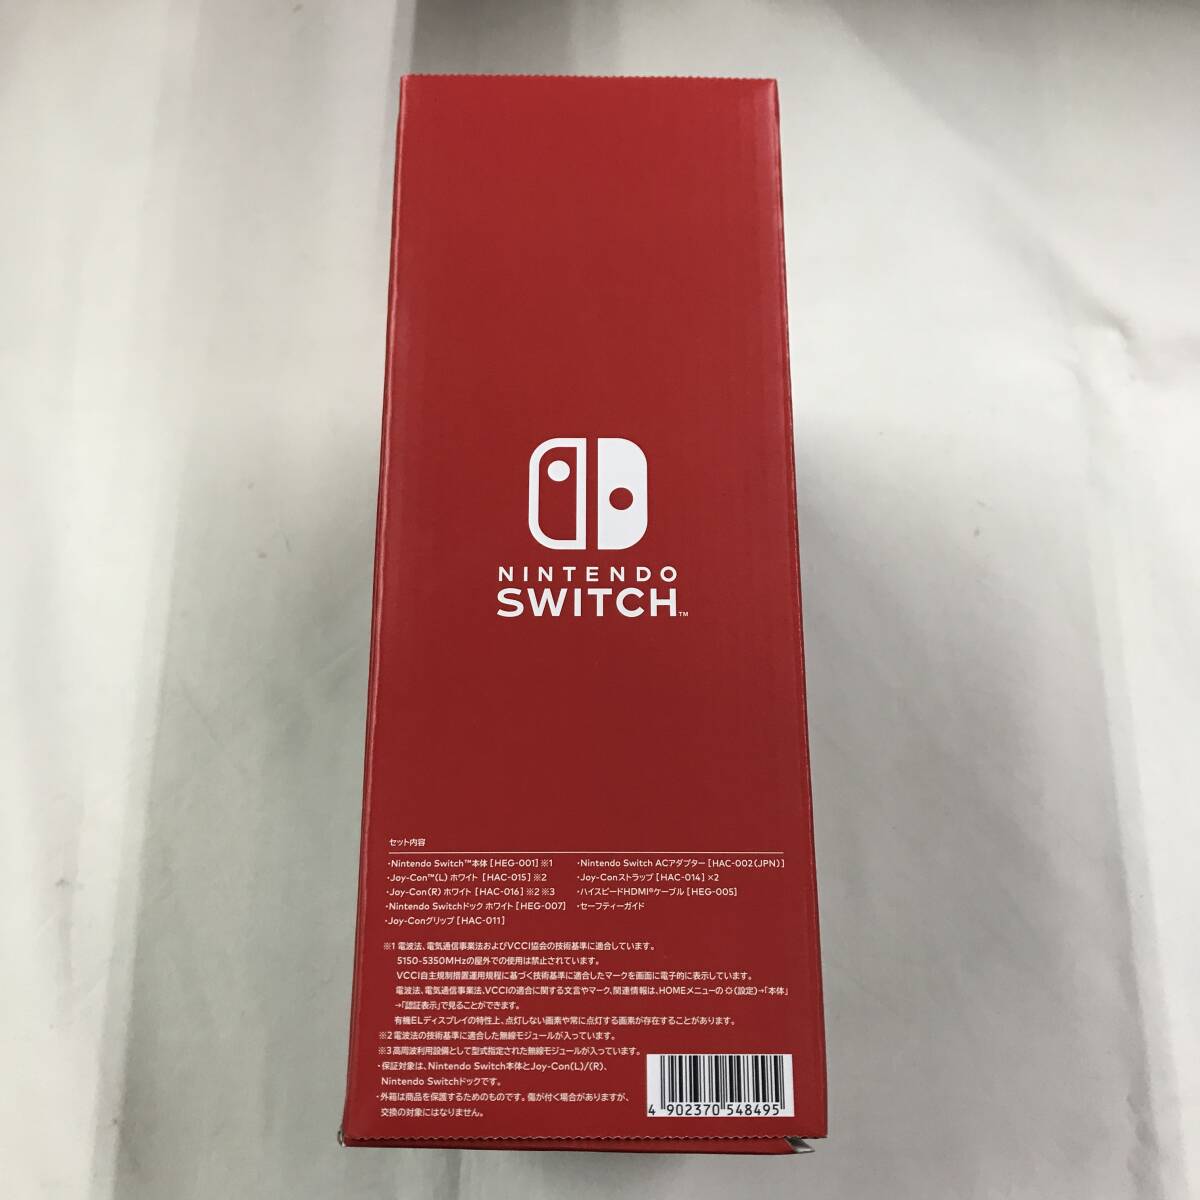 gb2463 free shipping! operation goods Nintendo Switch Nintendo switch body have machine EL model white 